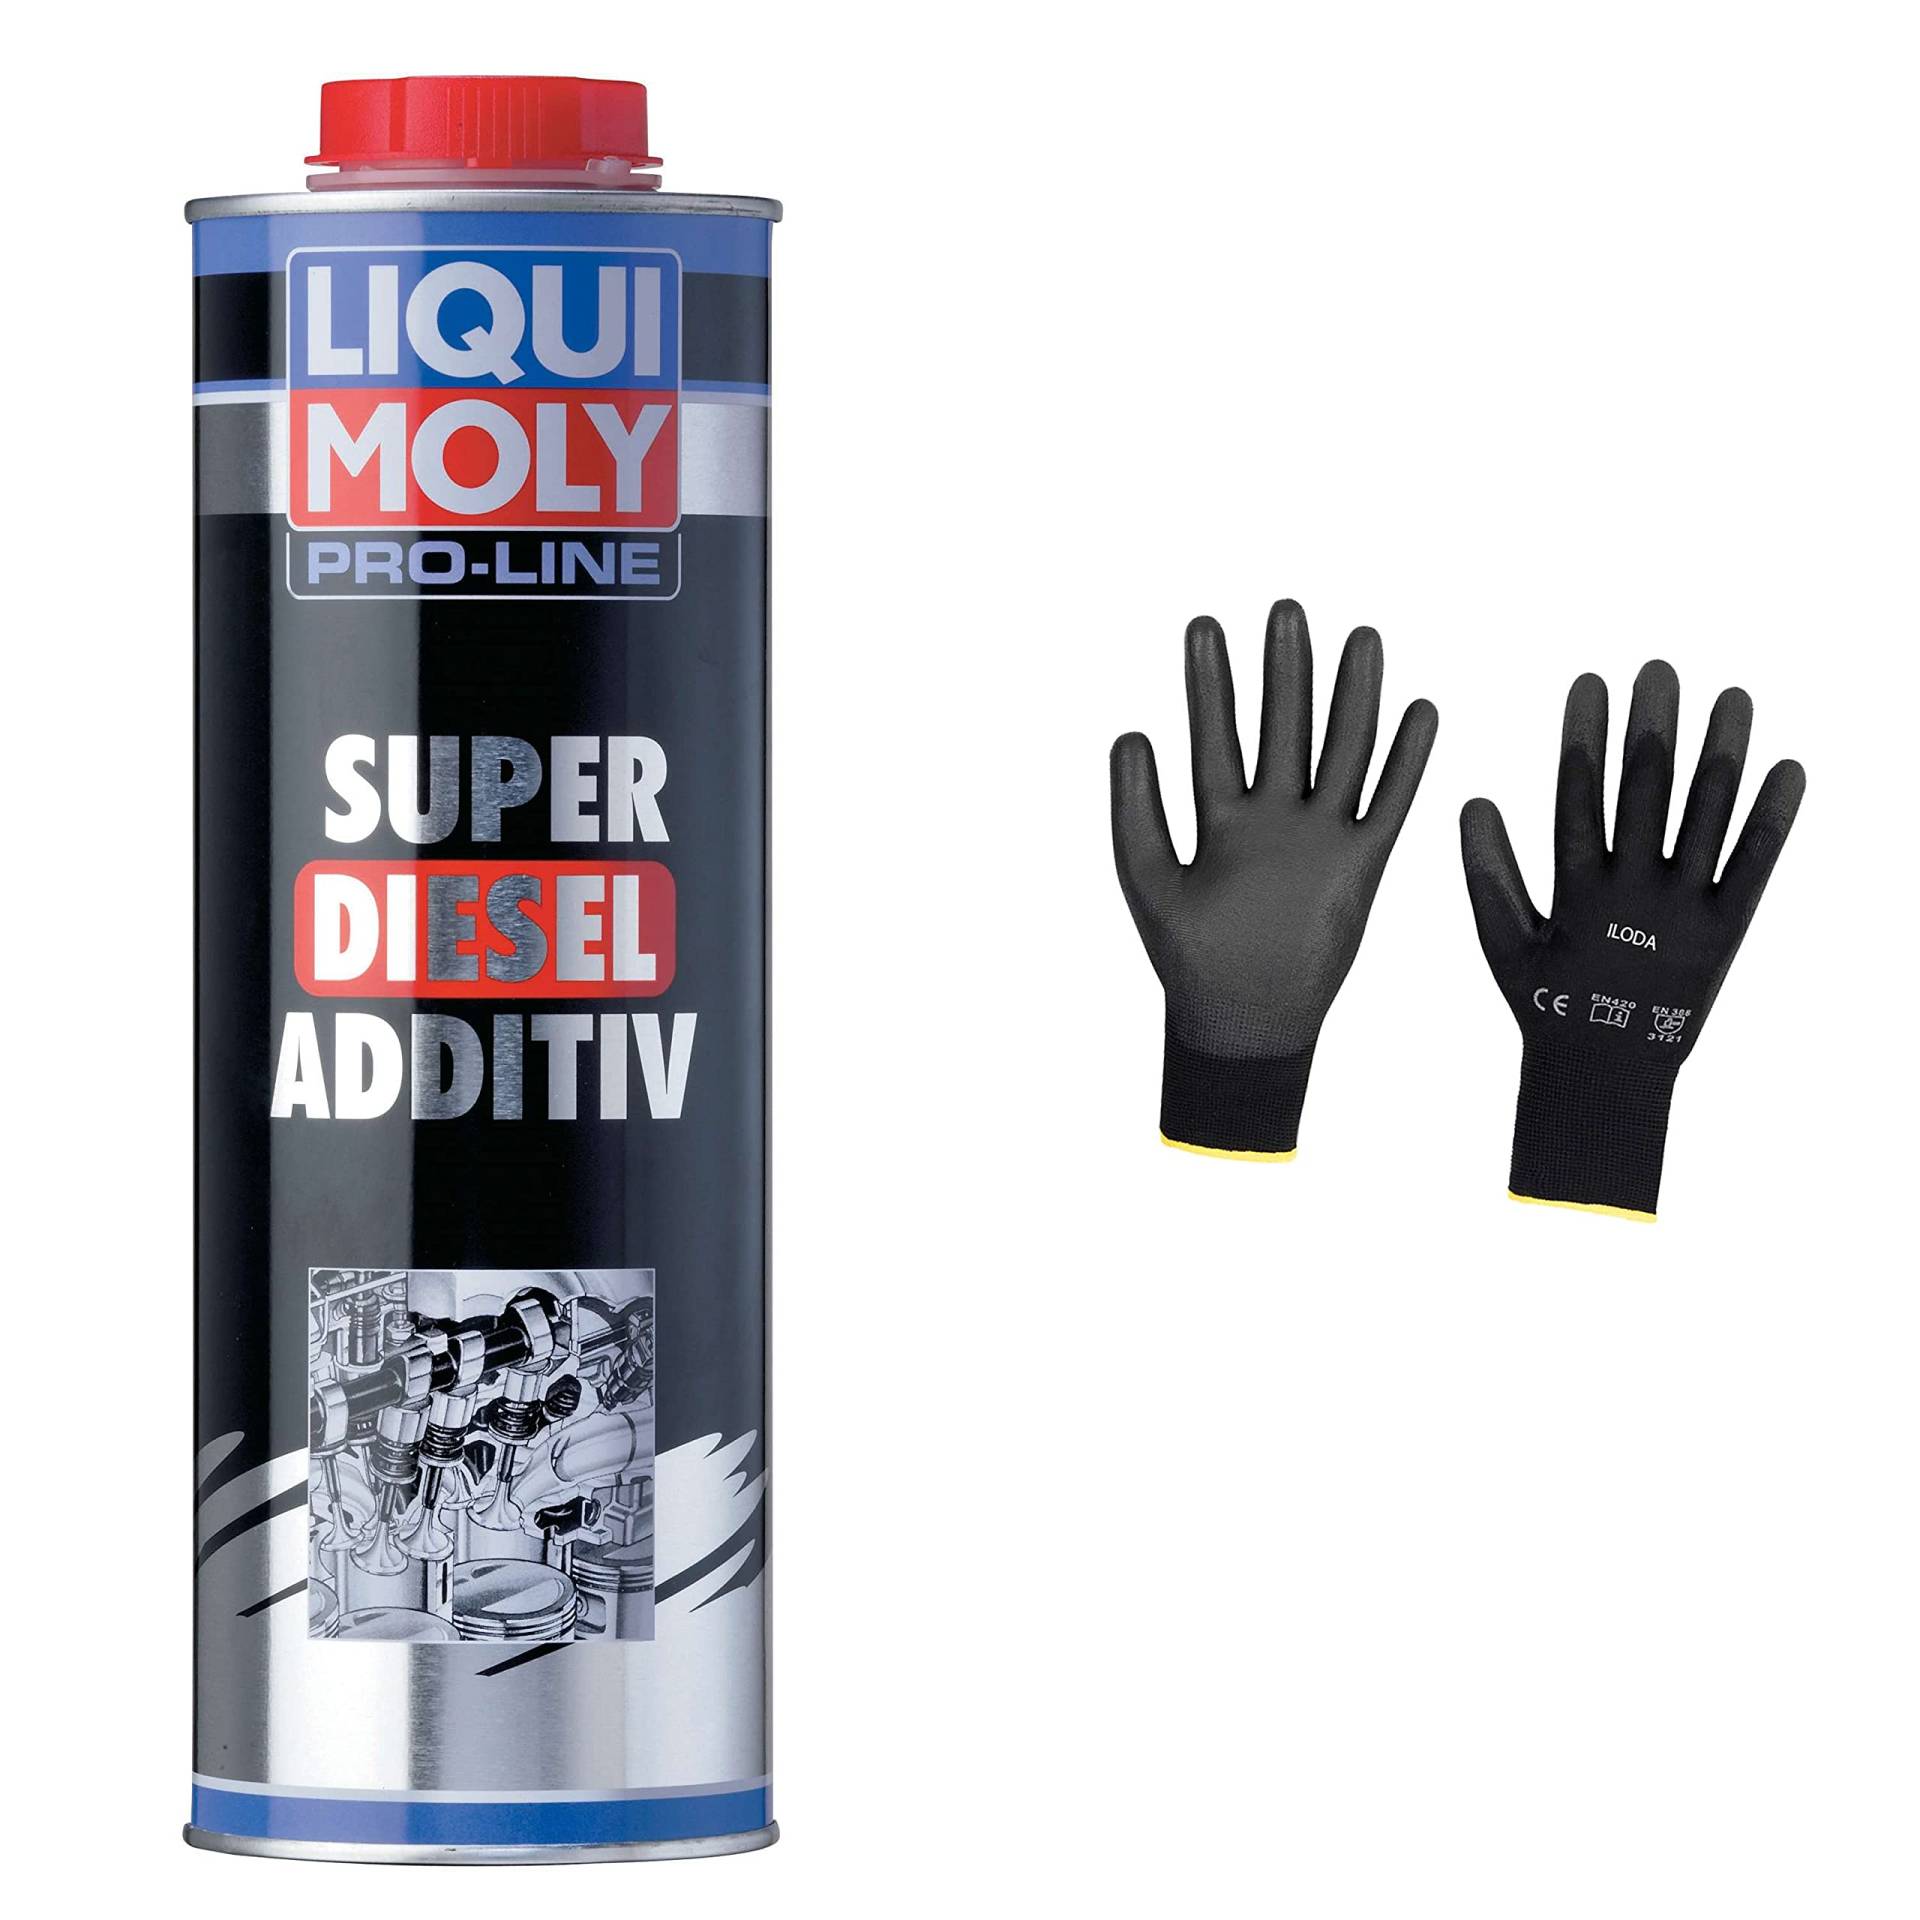 Iloda Original Liqui Moly 1l Pro-Line Super Diesel Additiv 5176 Schutzhandschuhe von Iloda